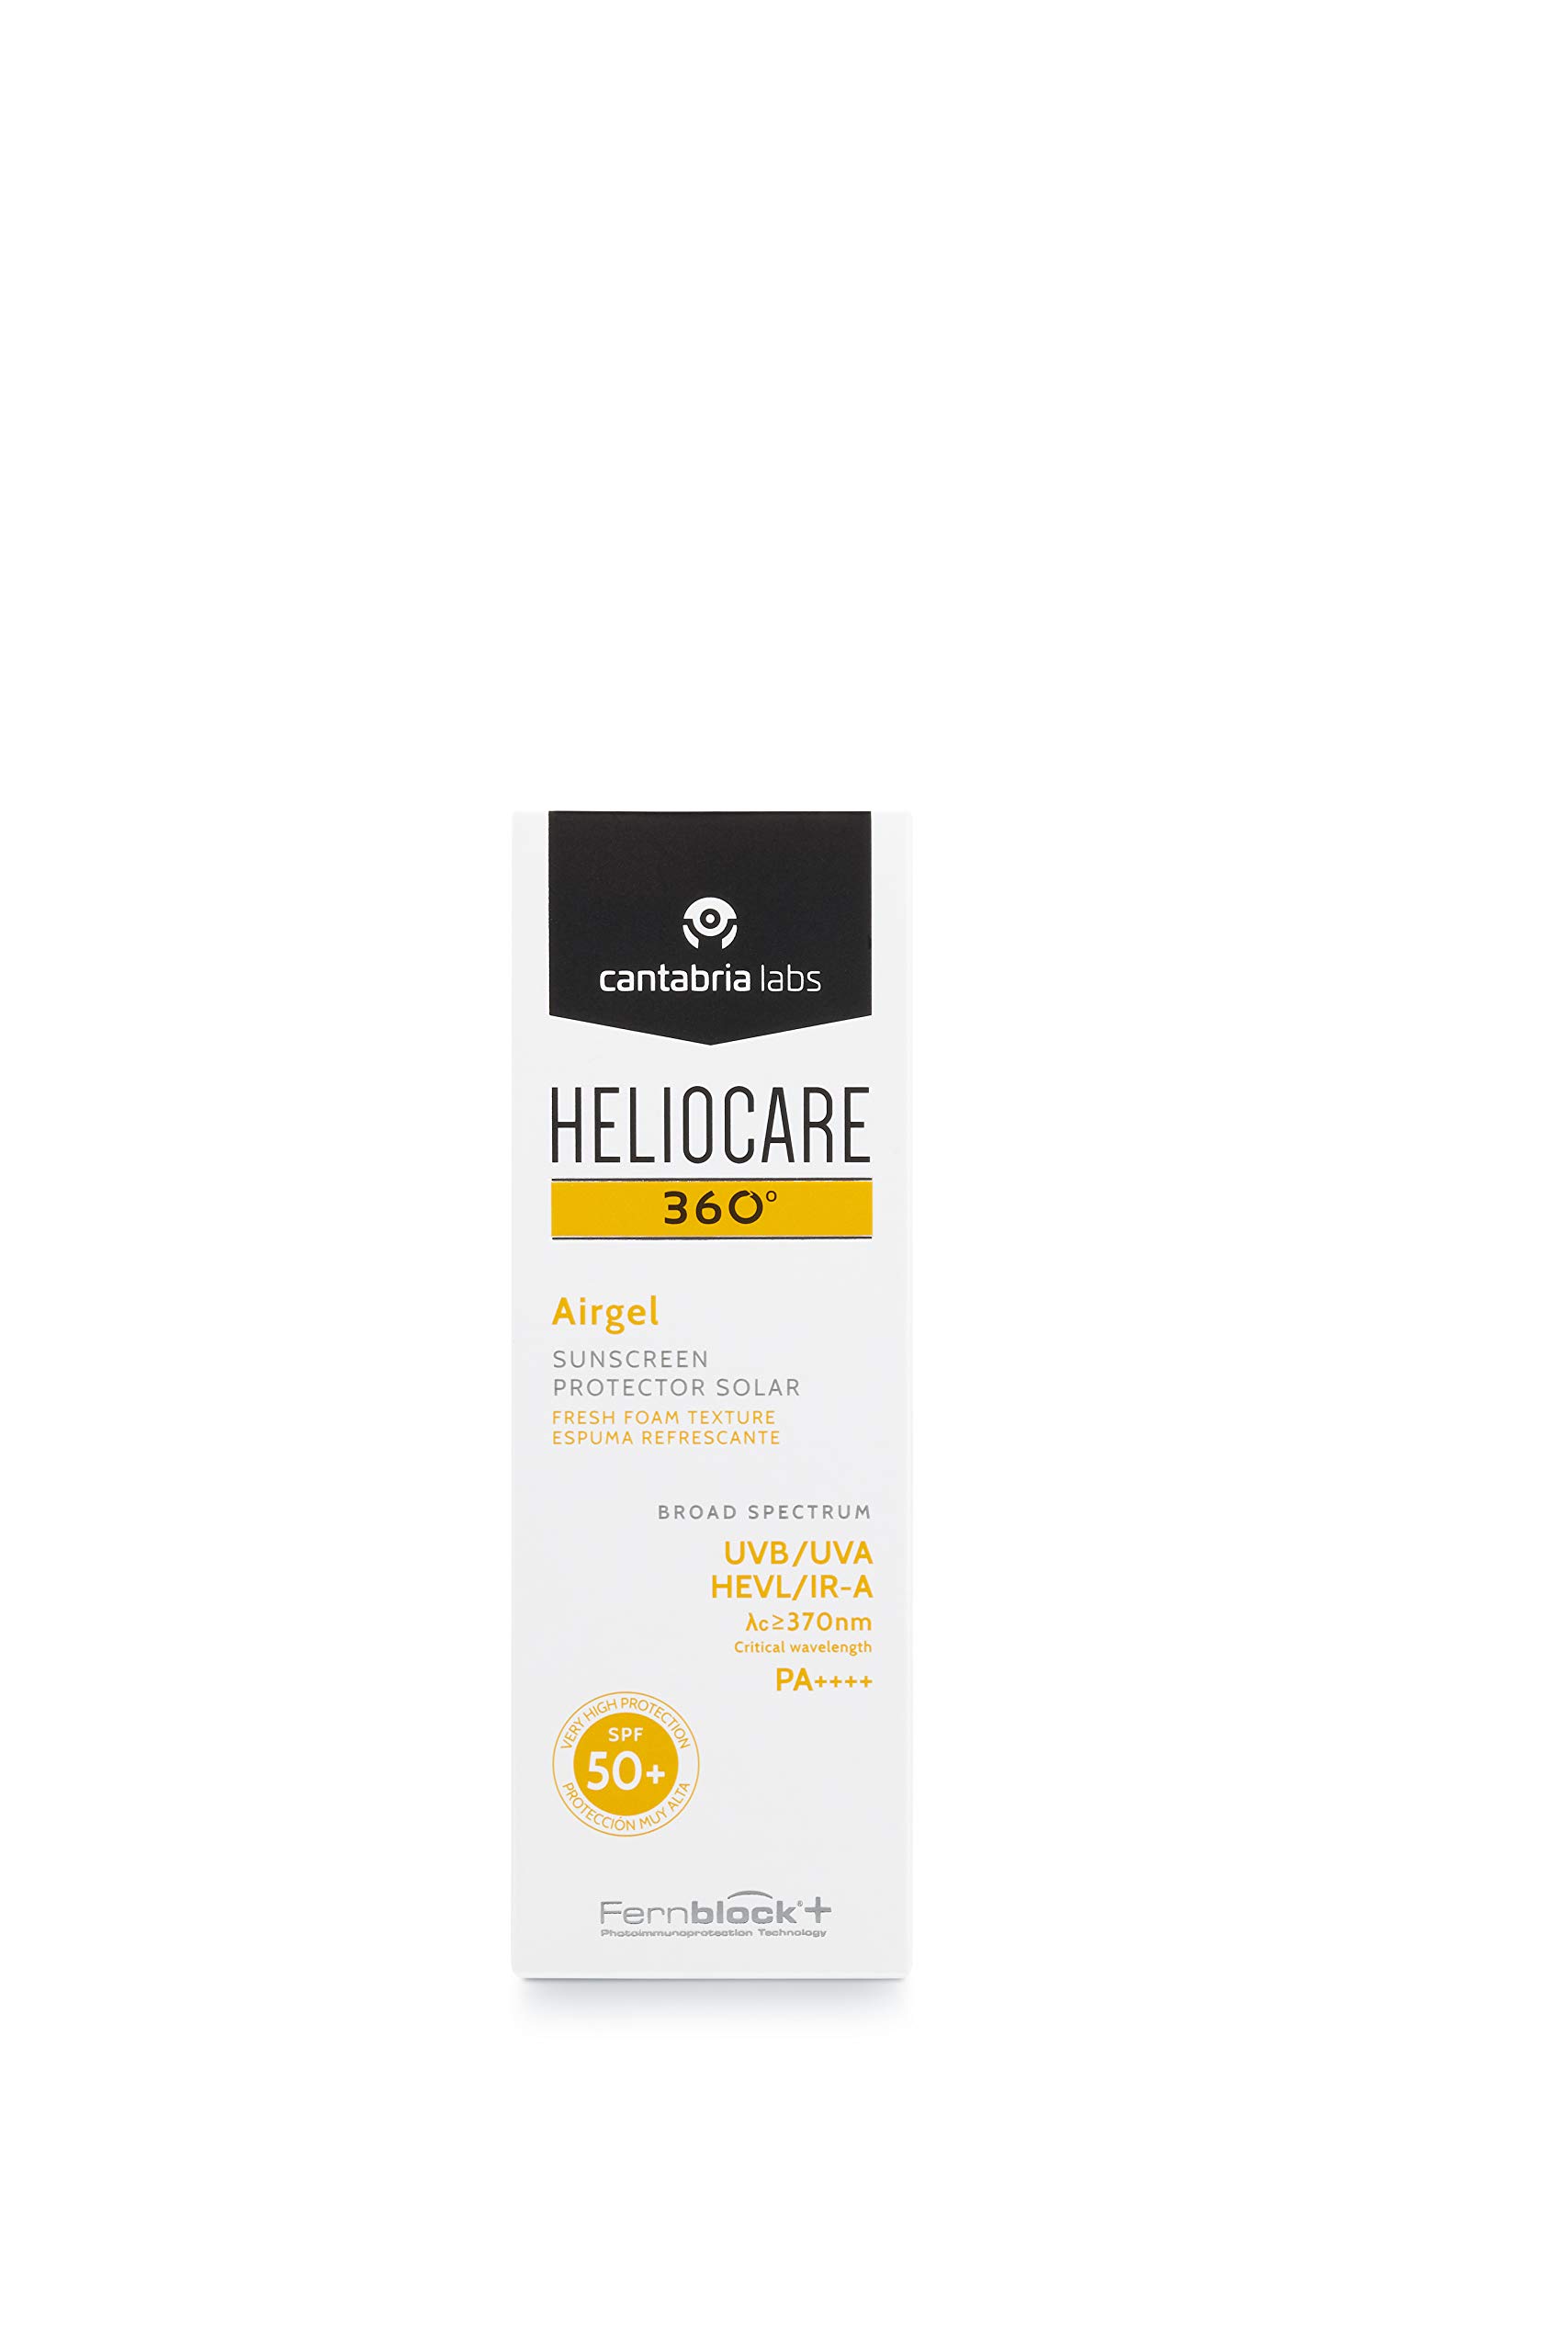 HELIOCARE 360° - Airgel SPF 50+, 60 ml